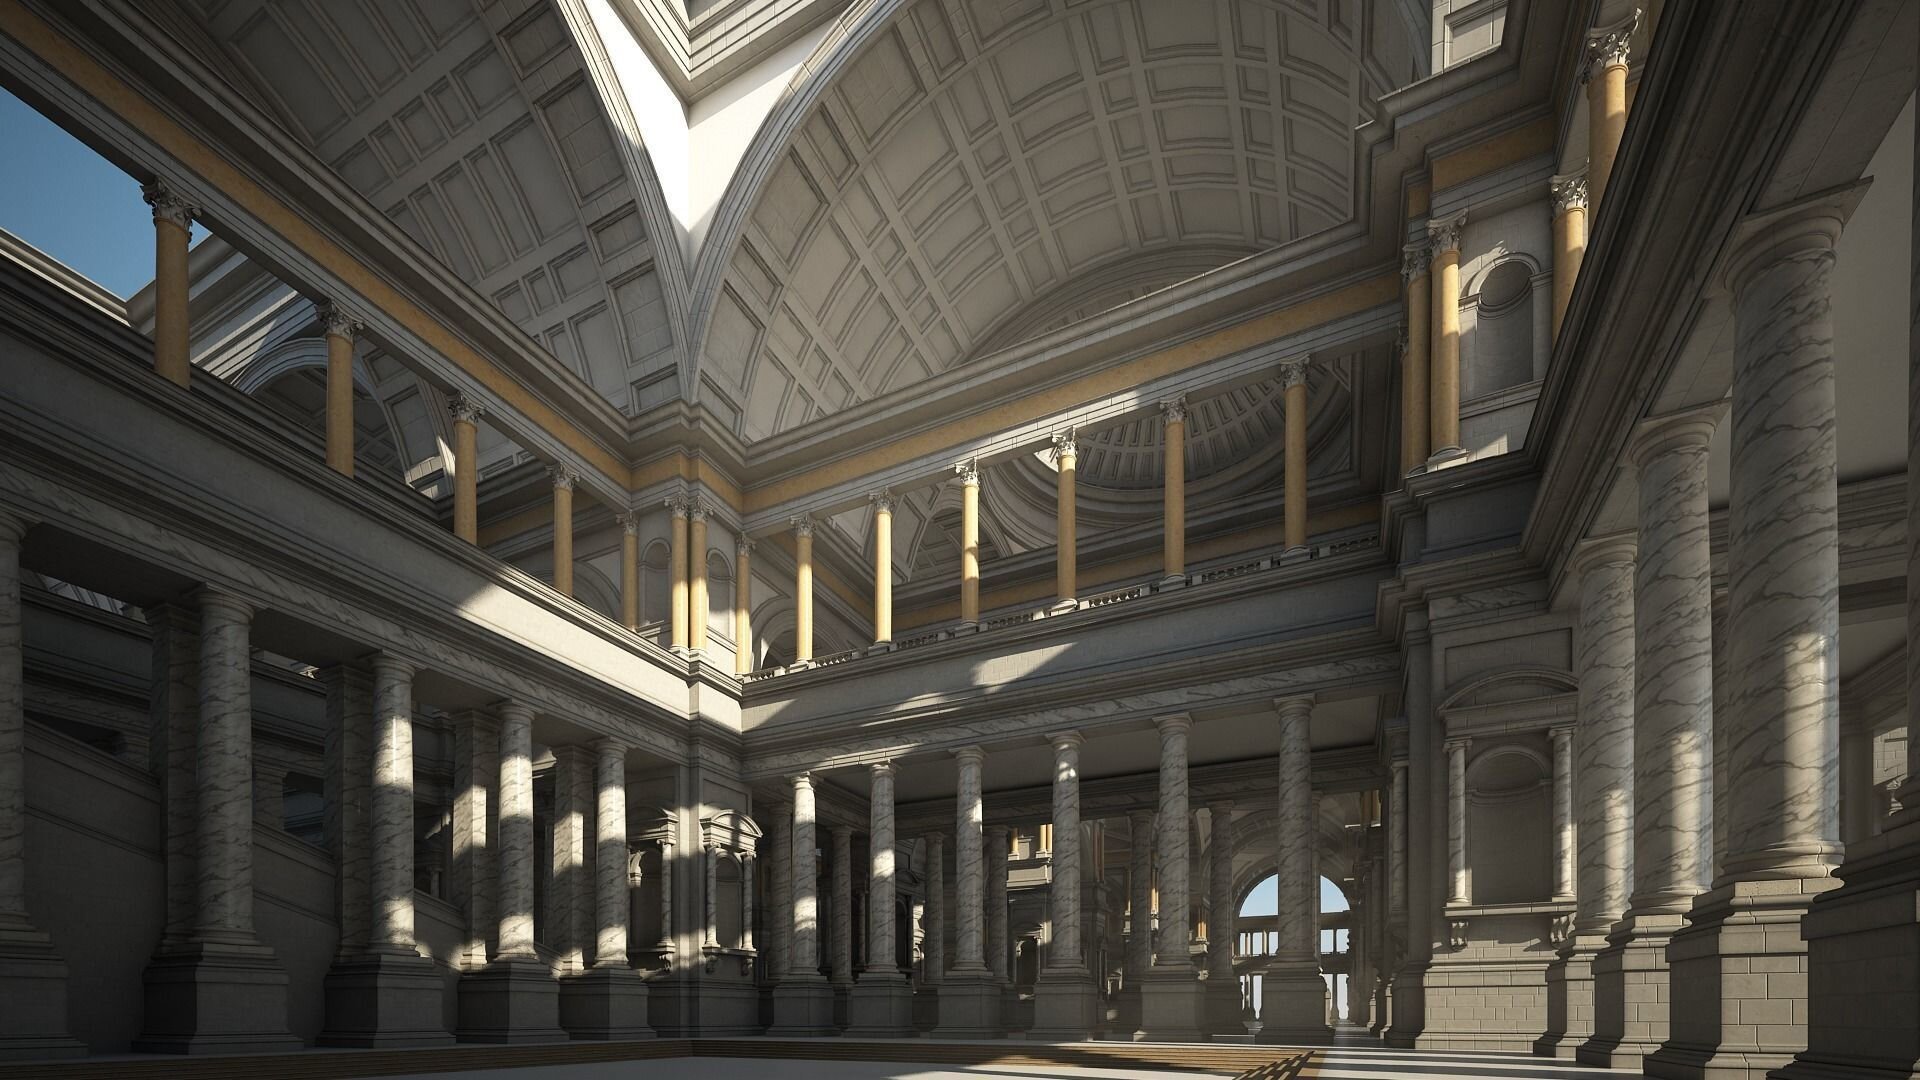 hall-of-an-ancient-palace-3d-model-max-fbx (4).jpg